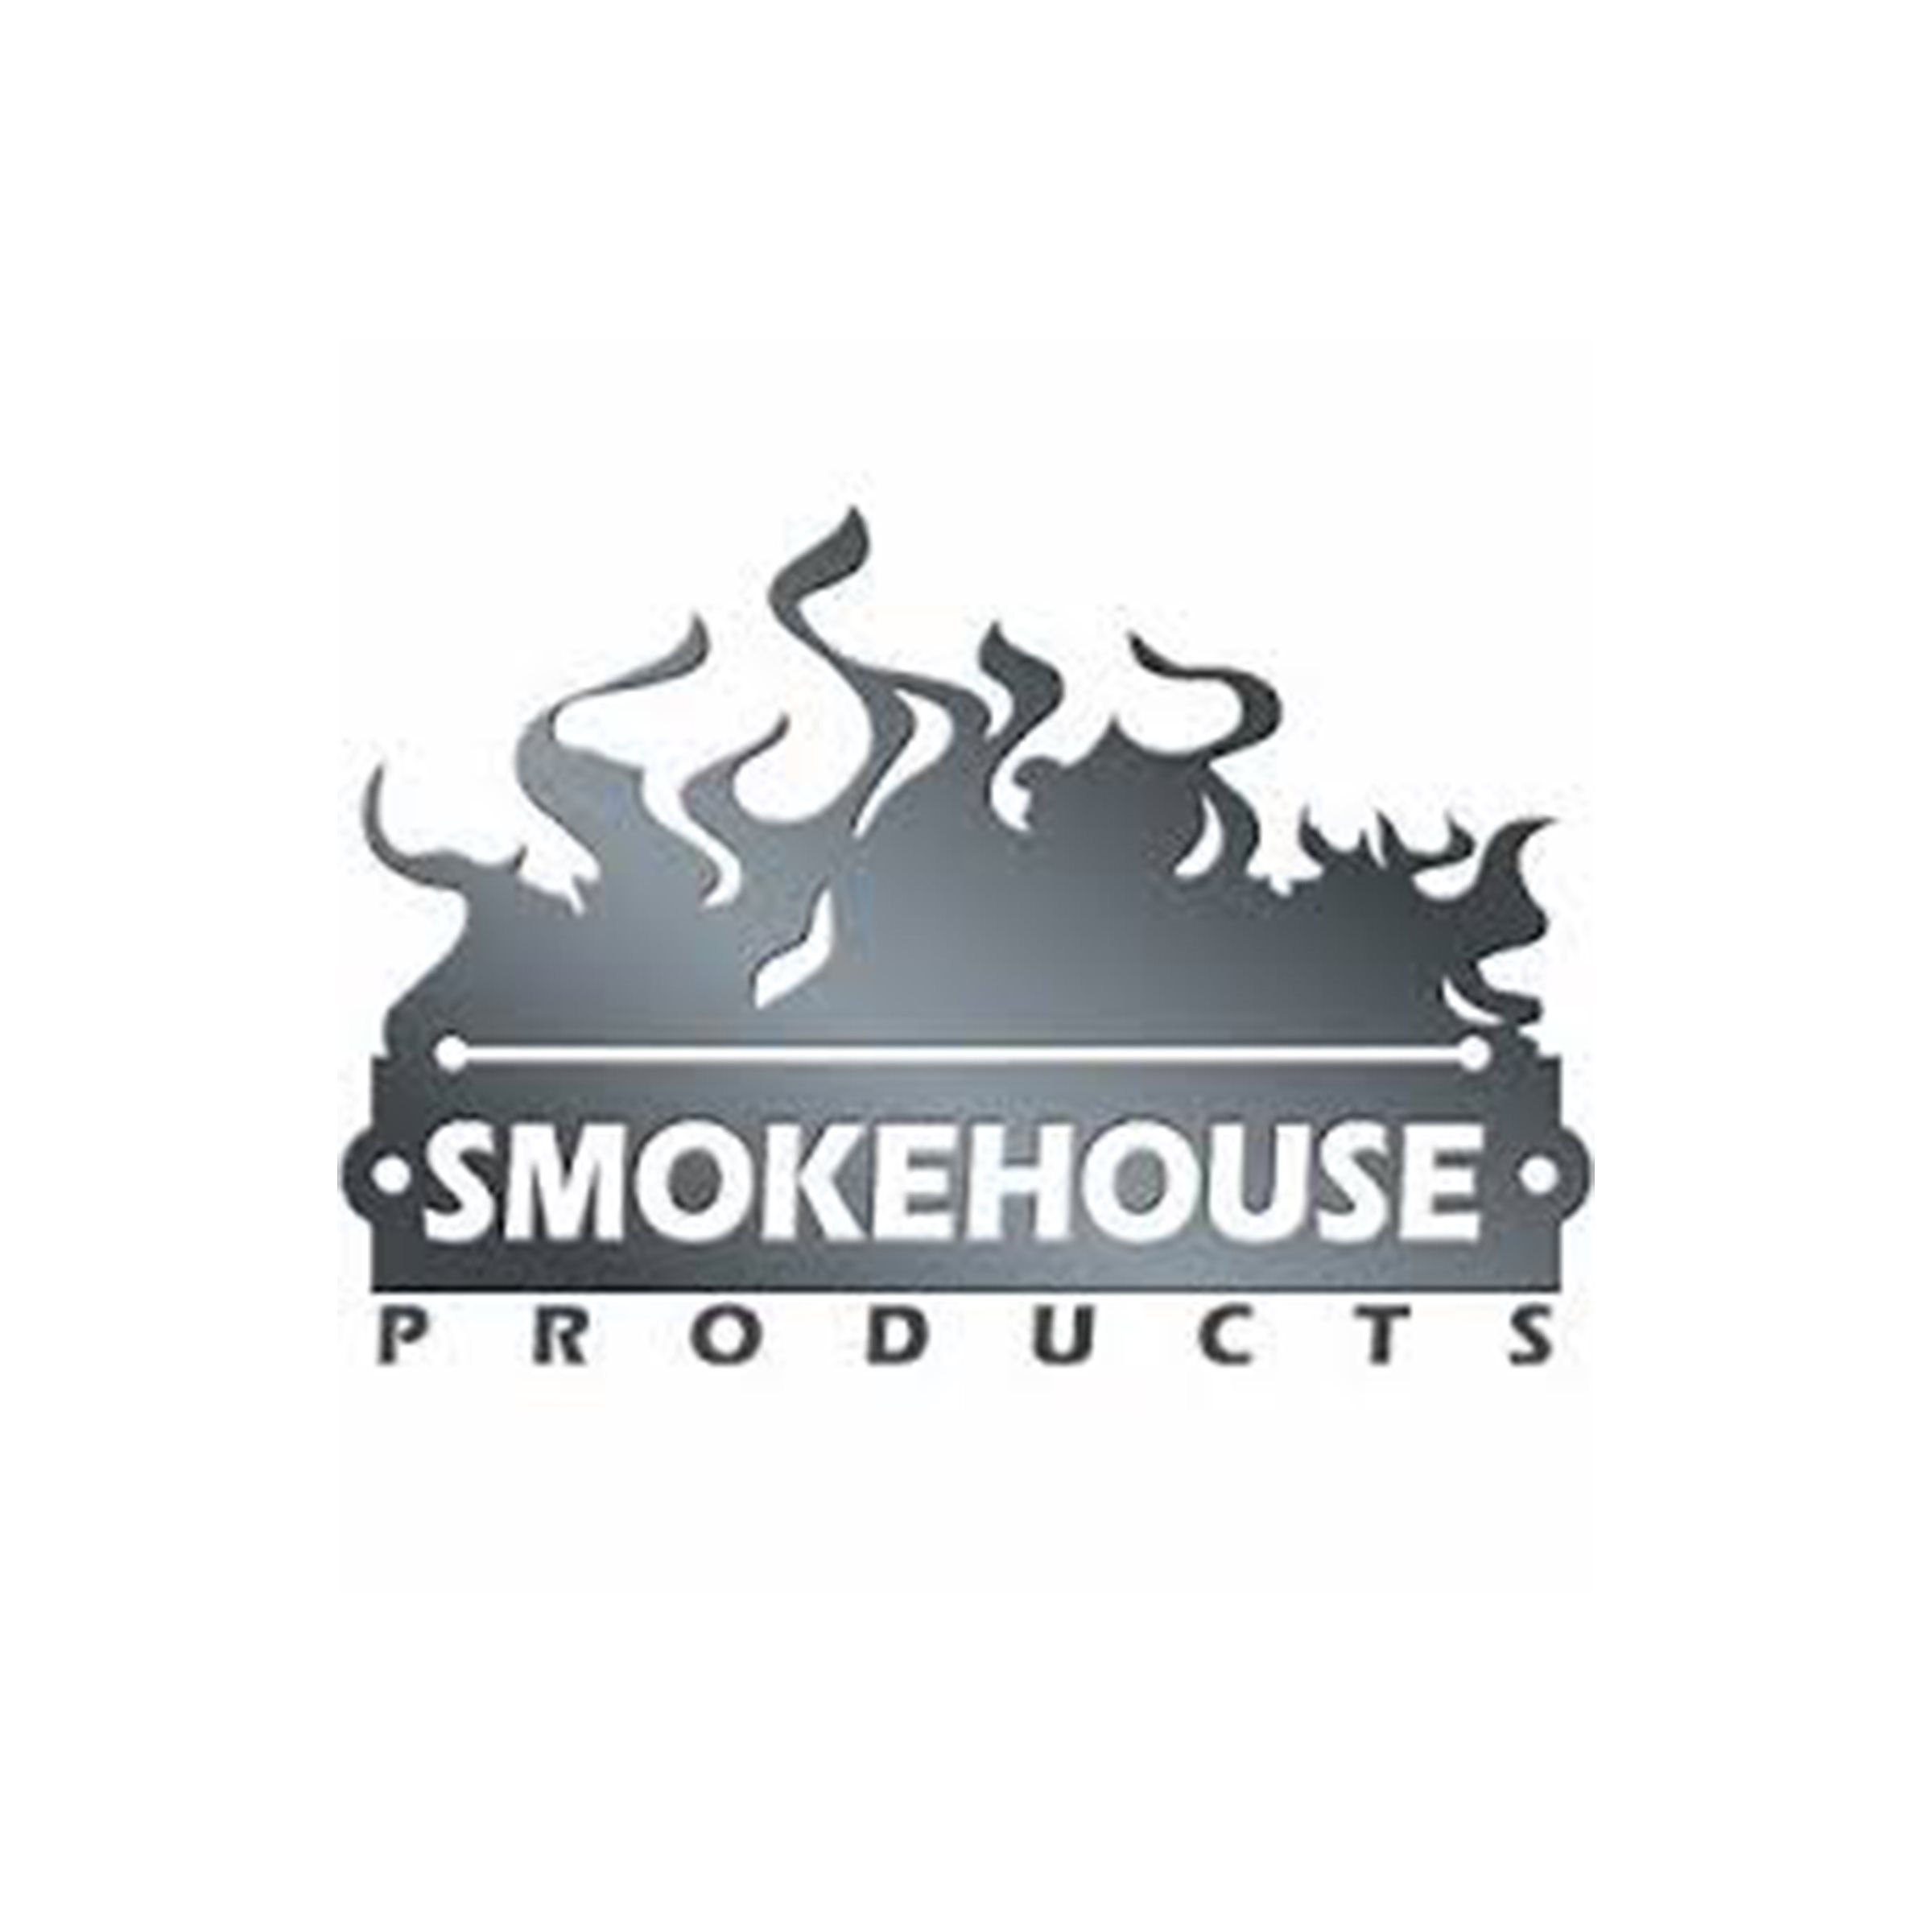 825-Smokehouse